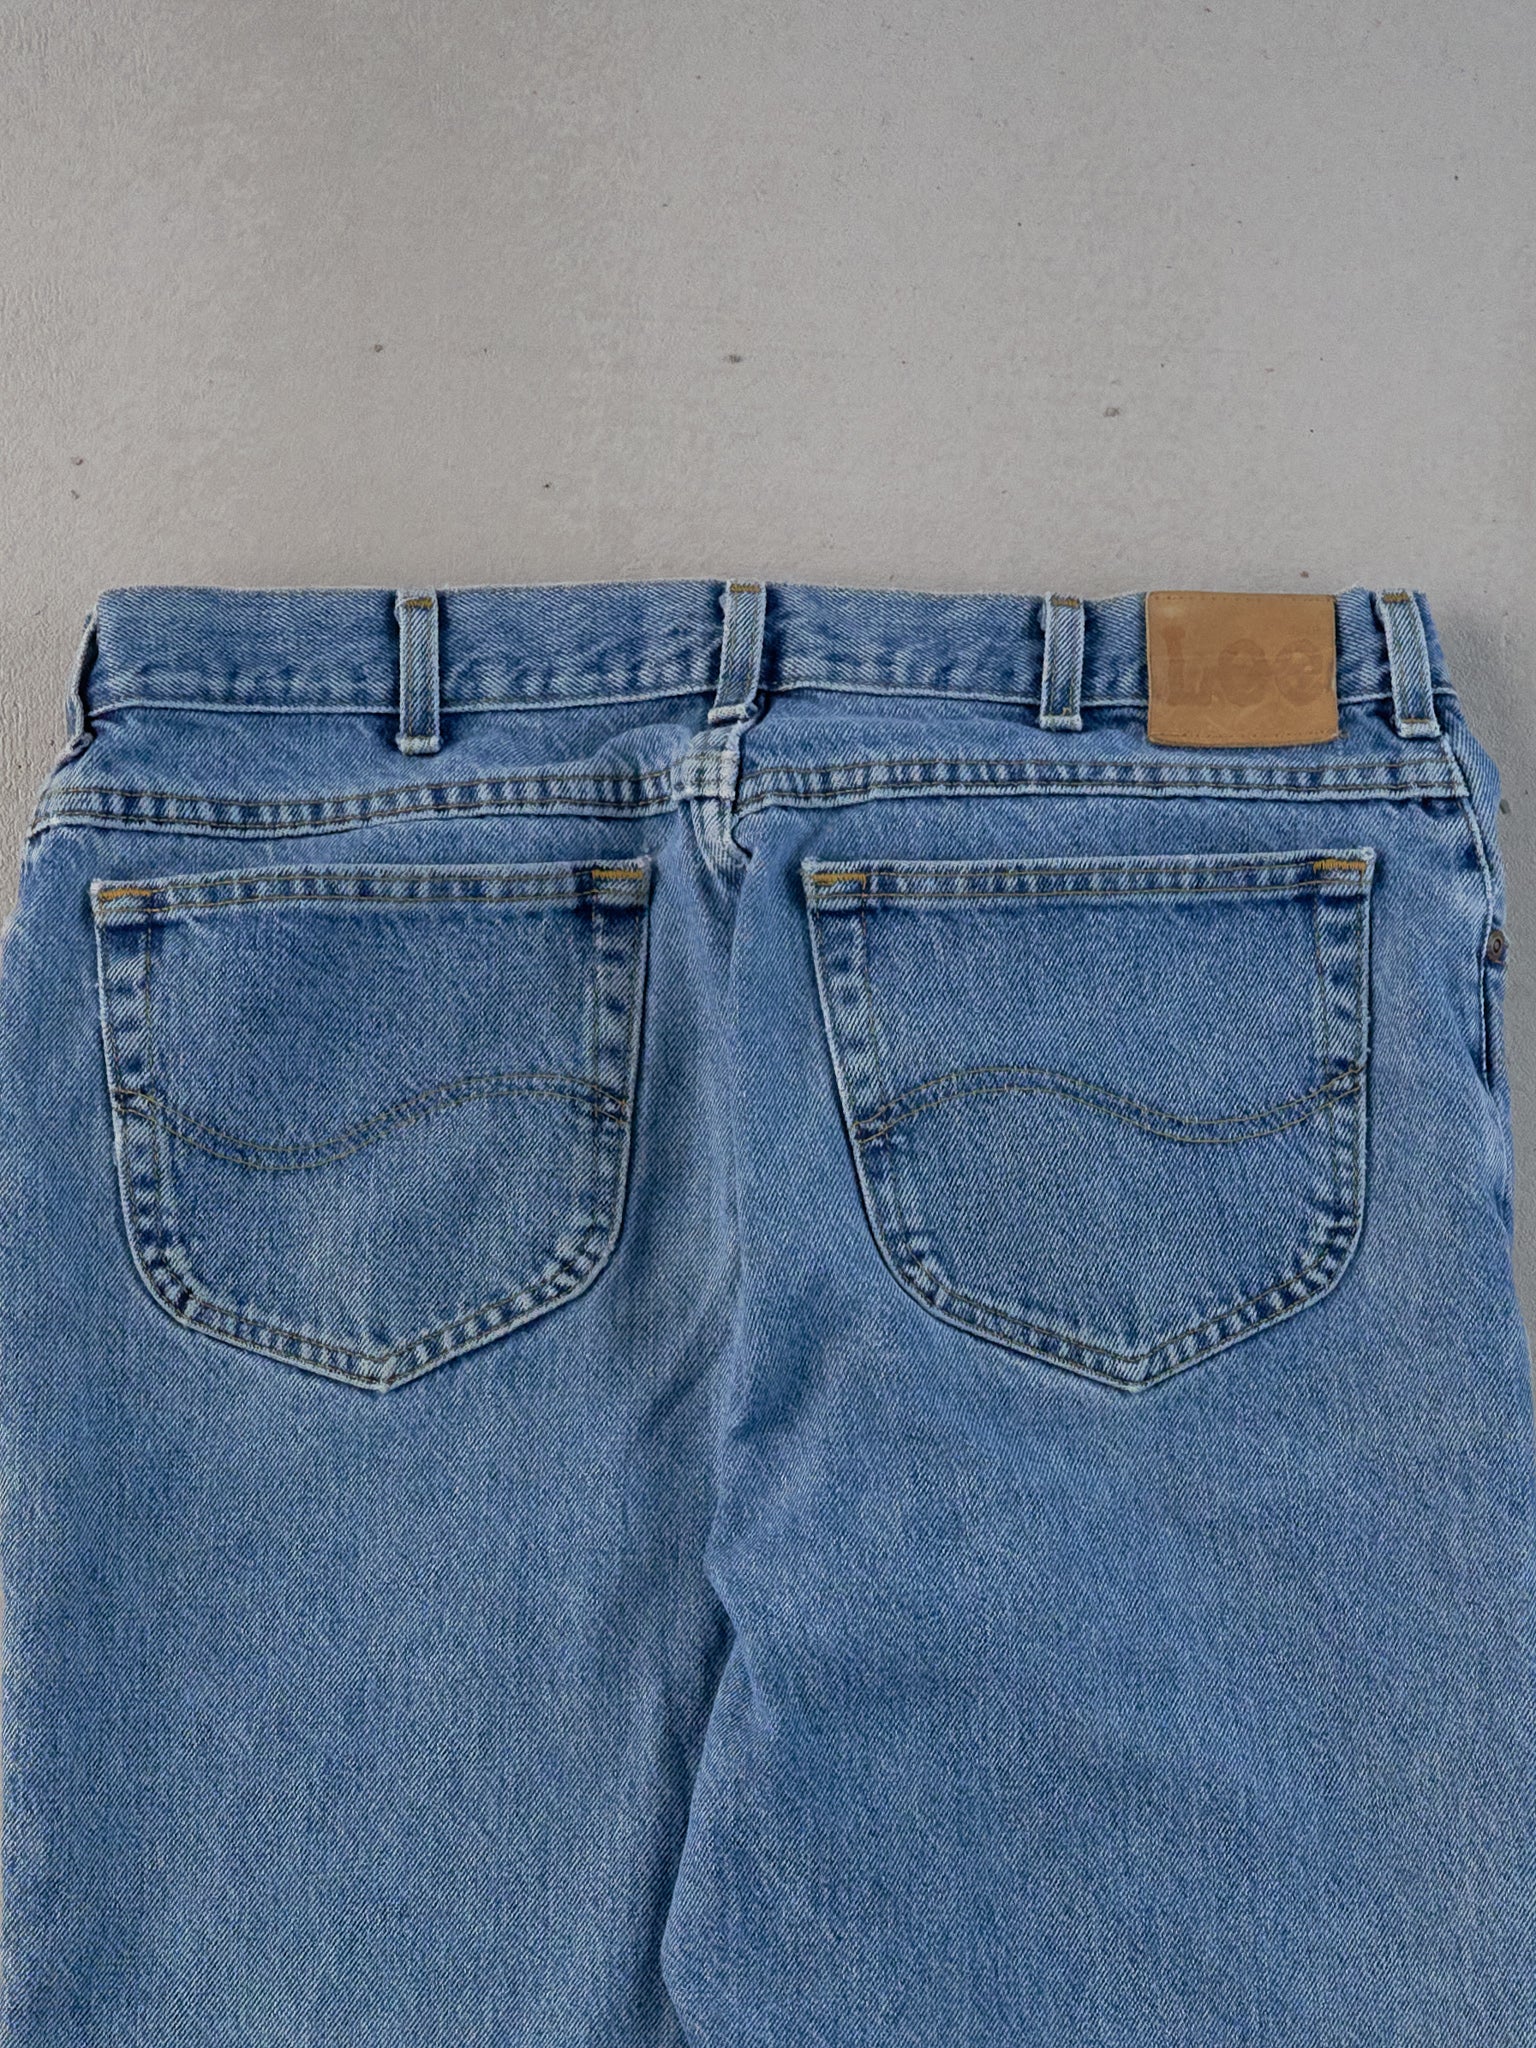 Vintage 90s Blue Lee Denim Jeans (35x31)